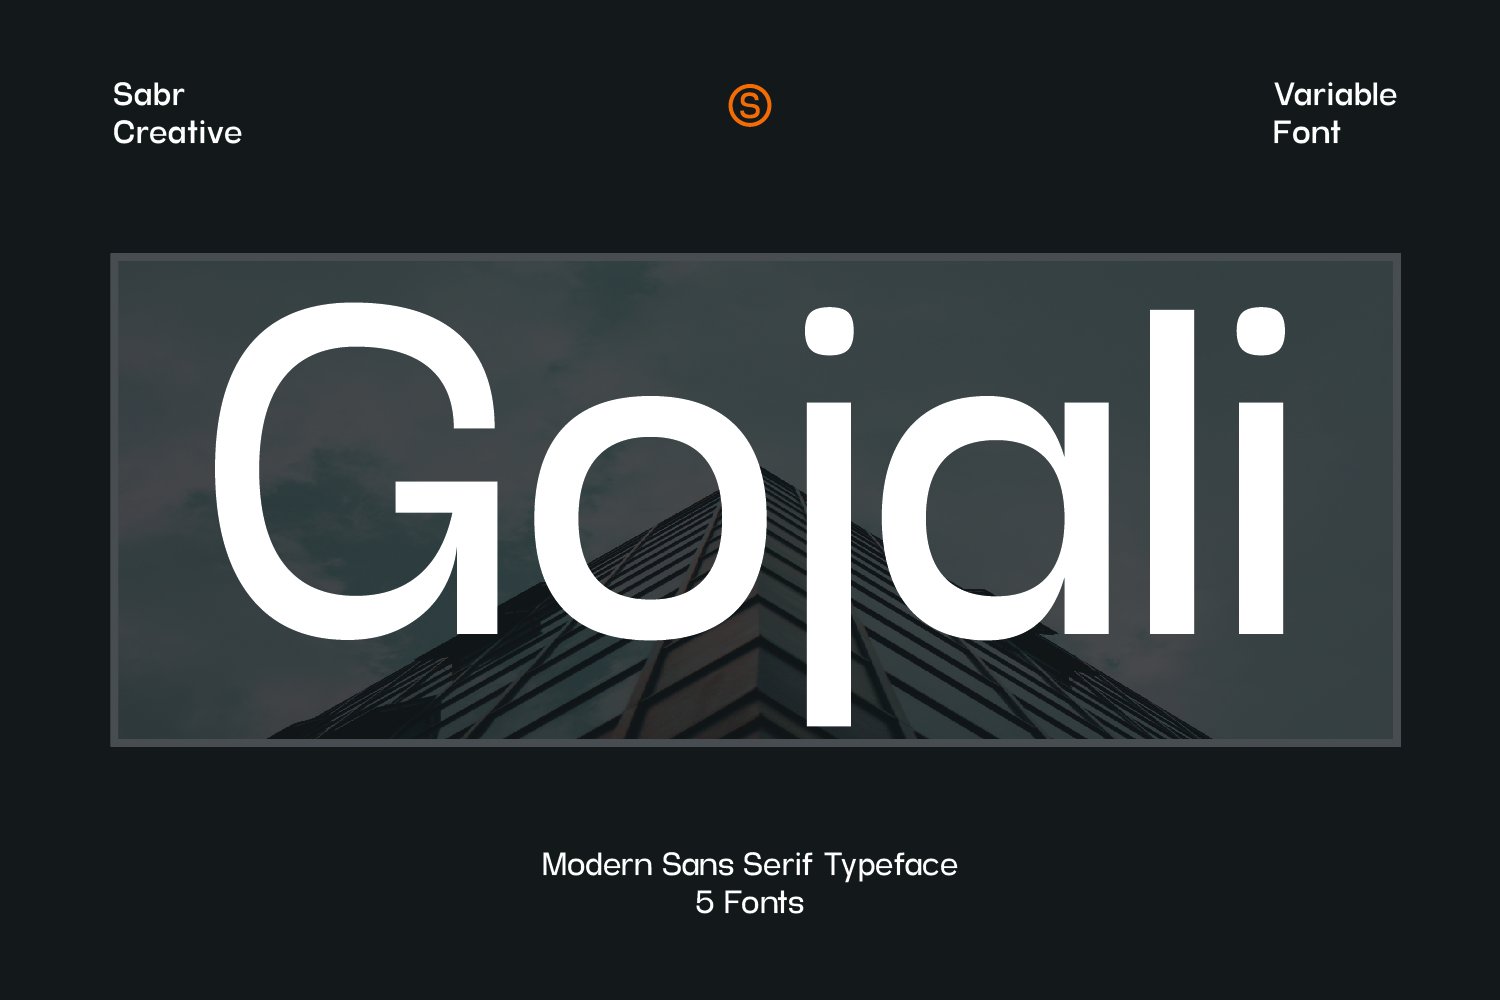 Gojali -  Variable Font cover image.